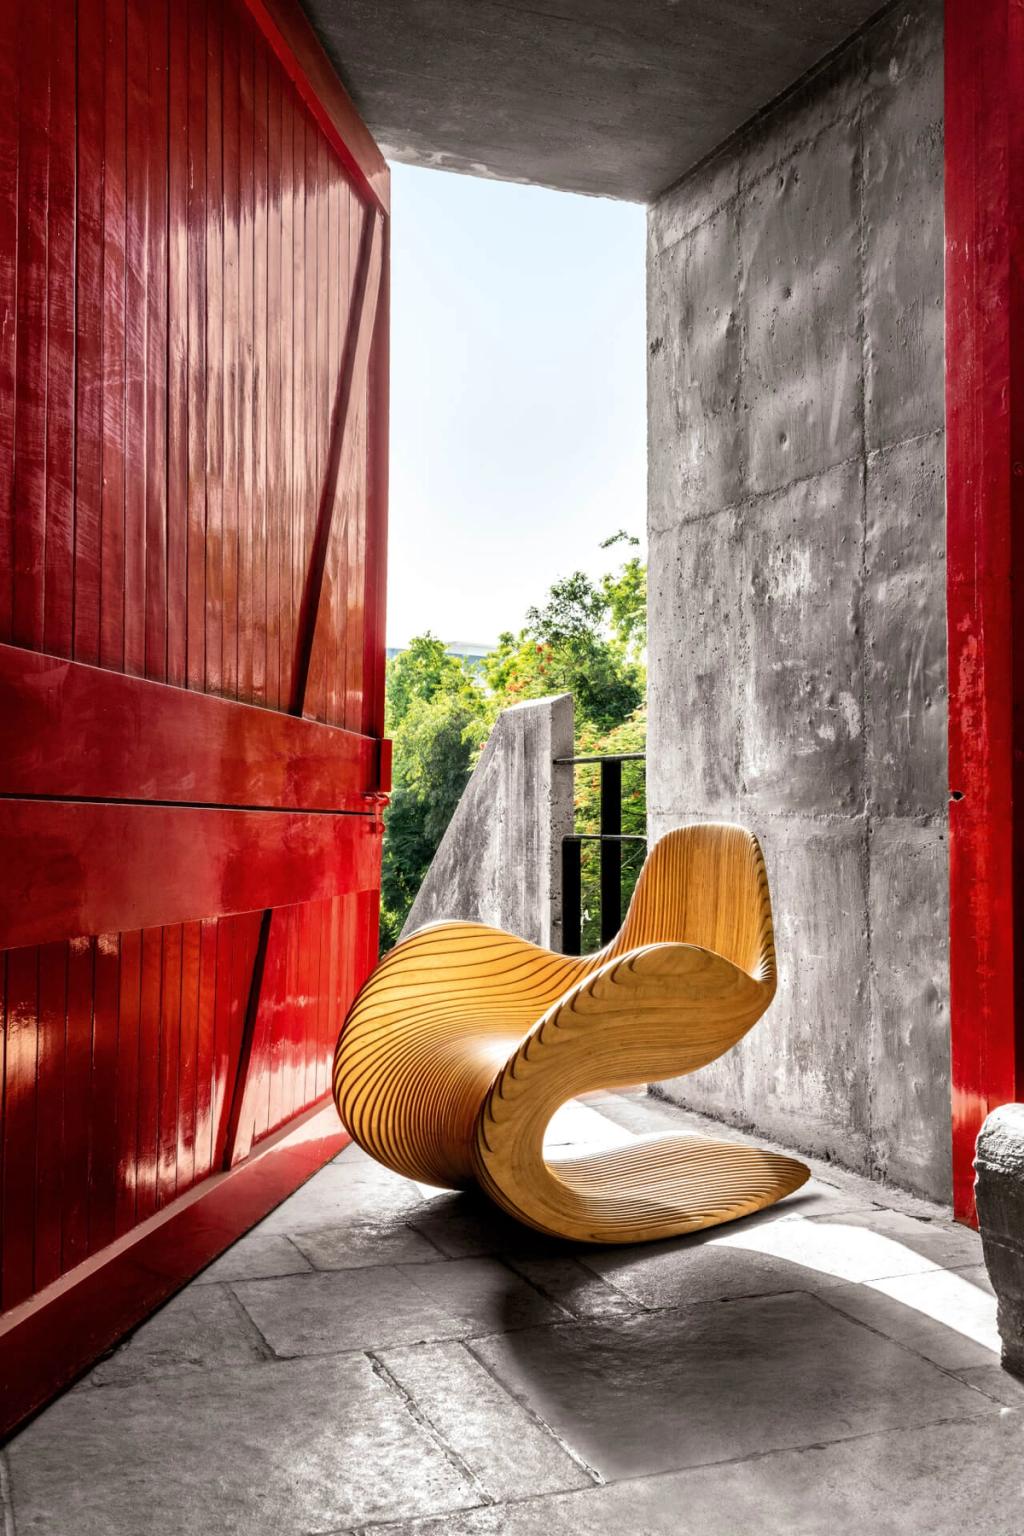 Chair in front of a red door